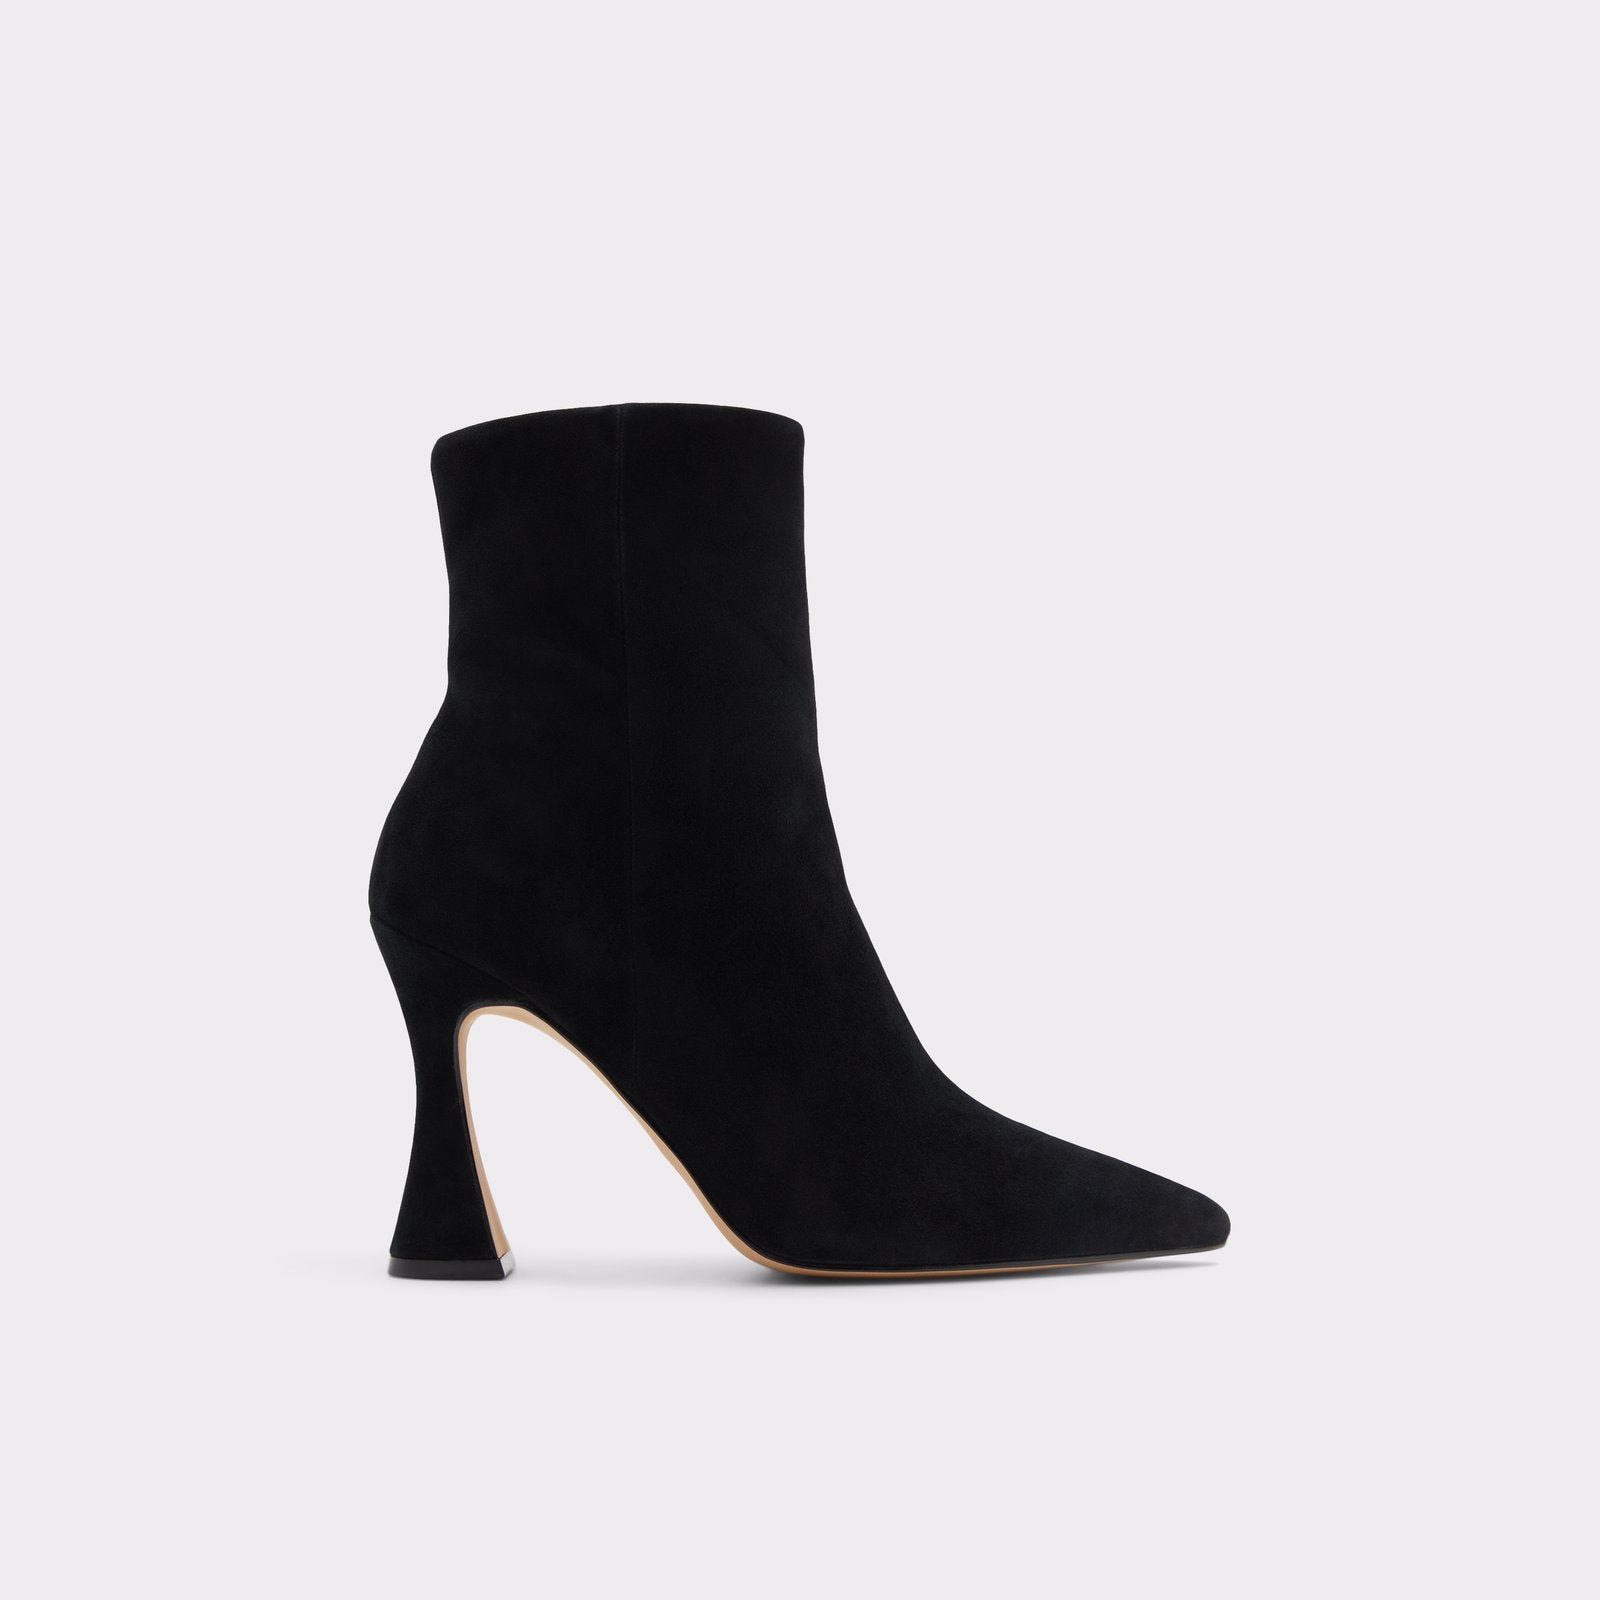 Aldo Women’s Ankle Boots Haireri (Black)